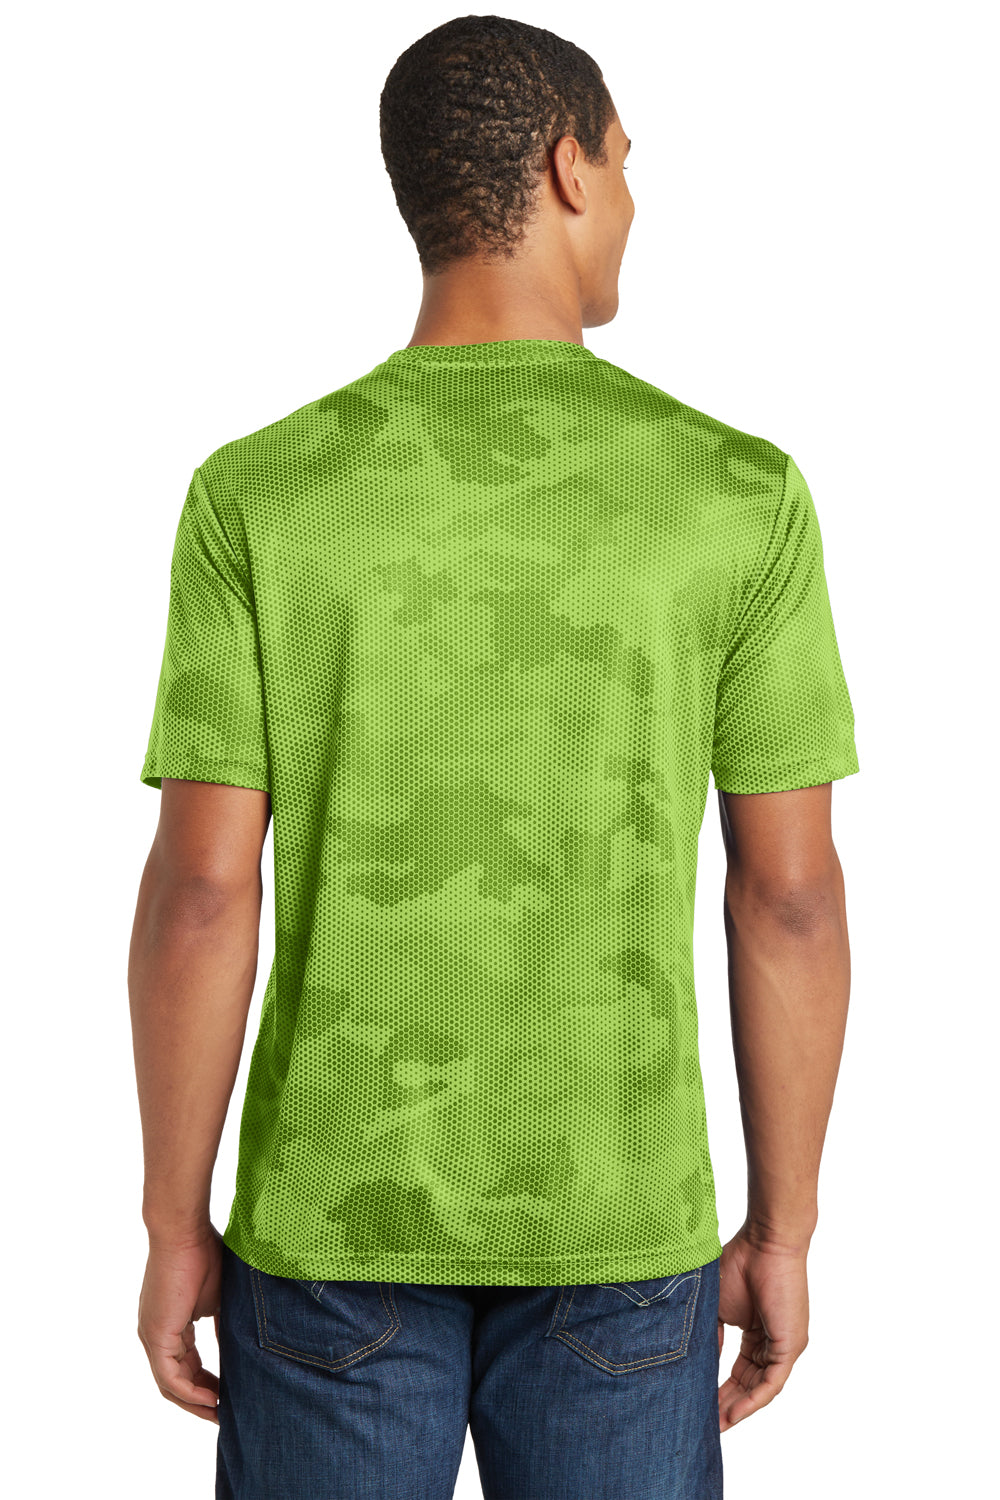 Sport-Tek ST370 Mens CamoHex Moisture Wicking Short Sleeve Crewneck T-Shirt Lime Green Back